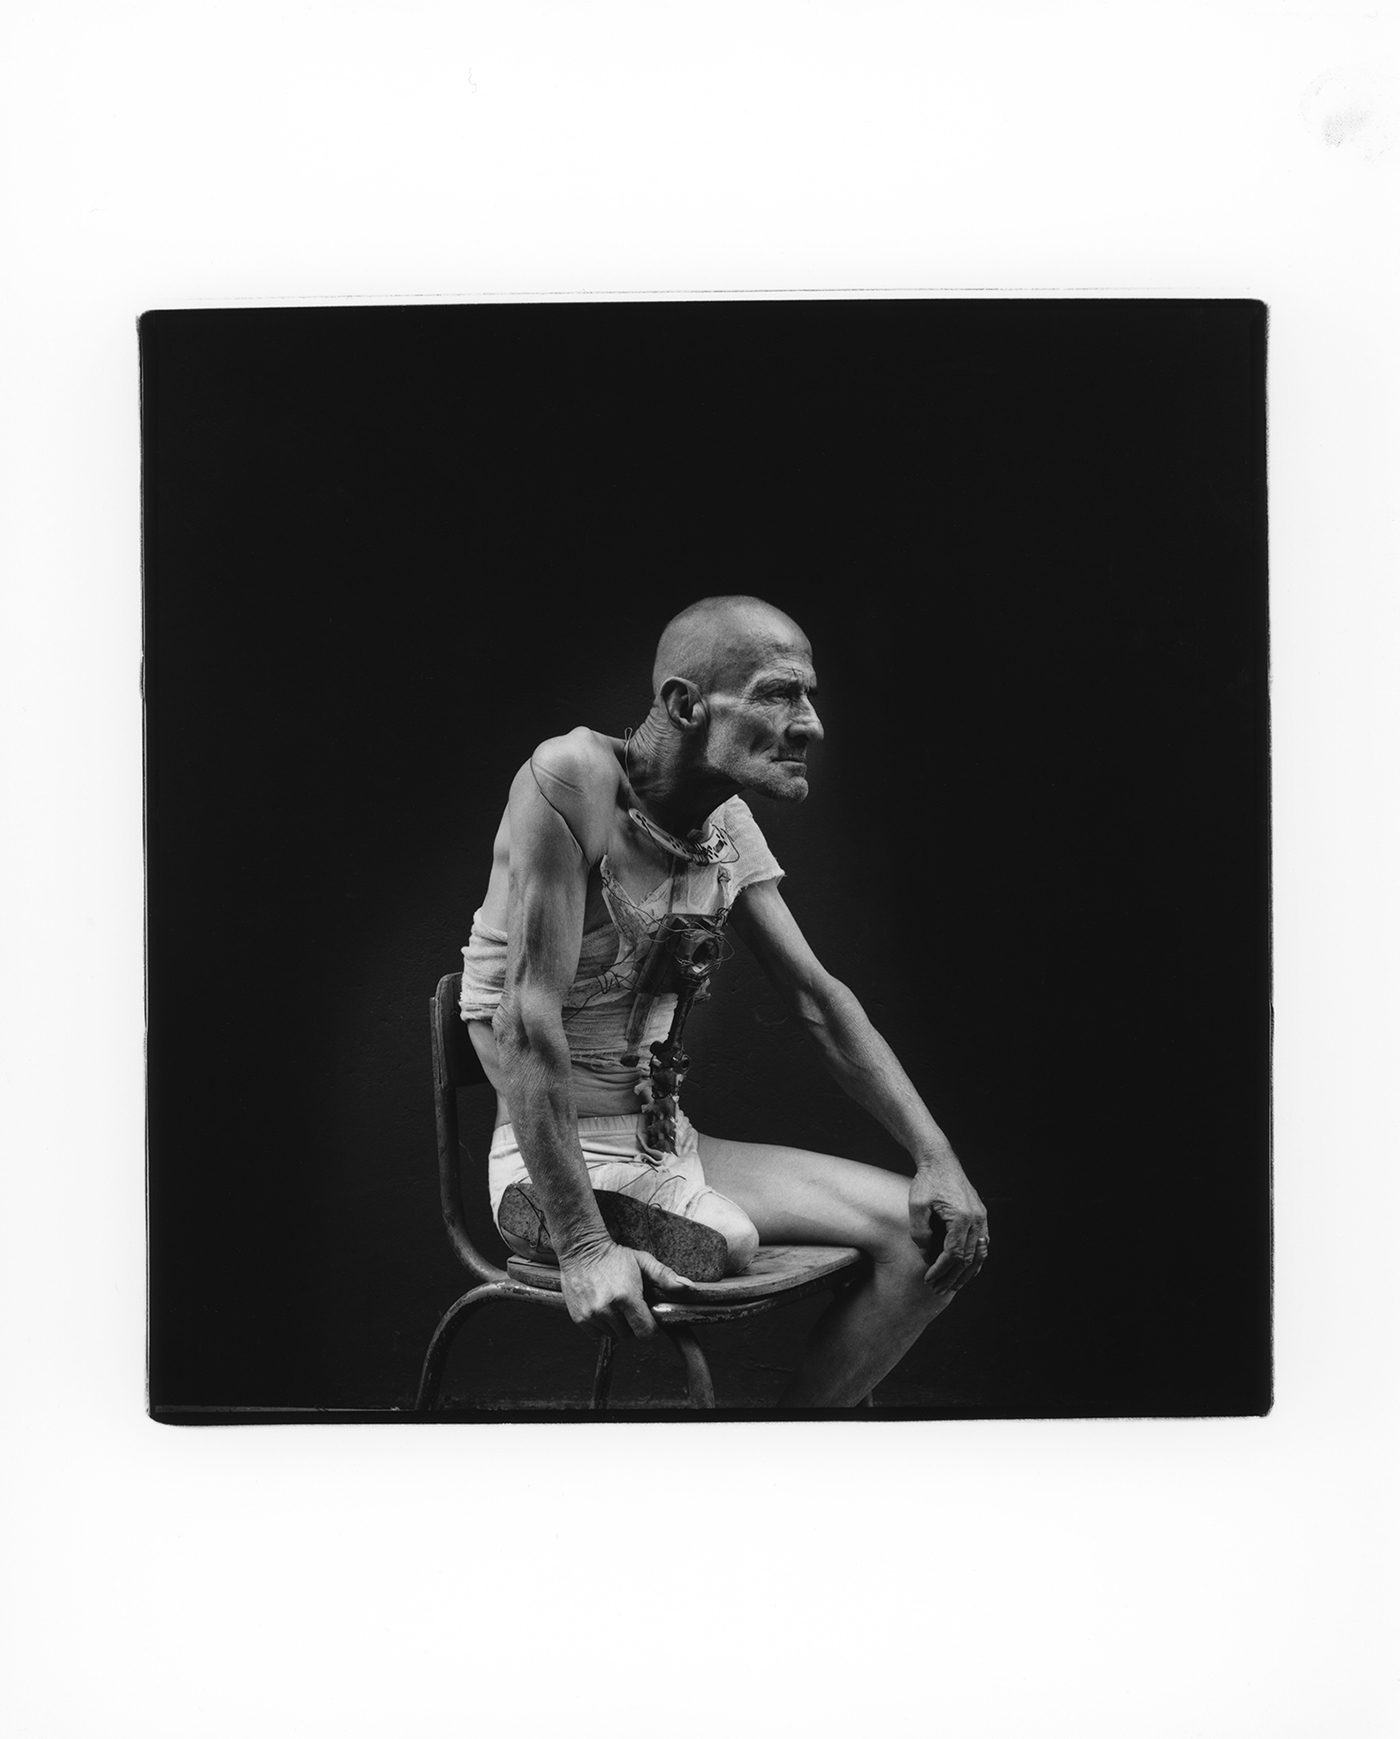 Adobe Portfolio blackandwhite Analogue film120 Hasselblad ortopedics imaginary darkroom sculpture